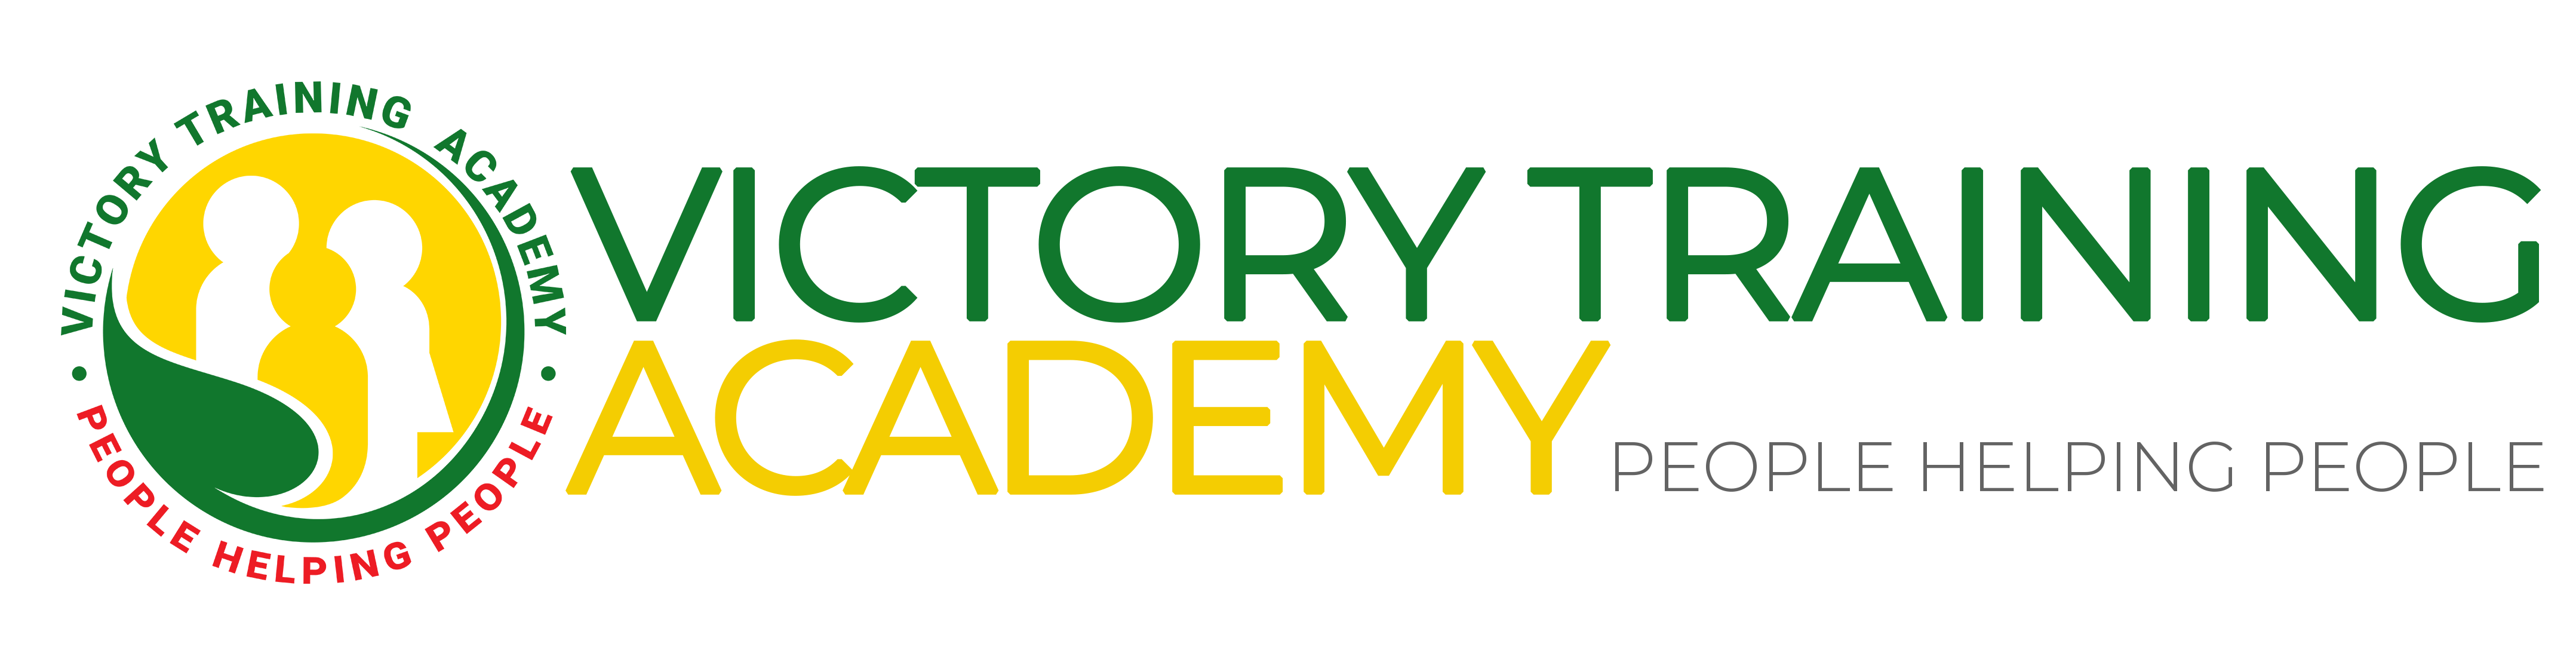 Victory Training Academy